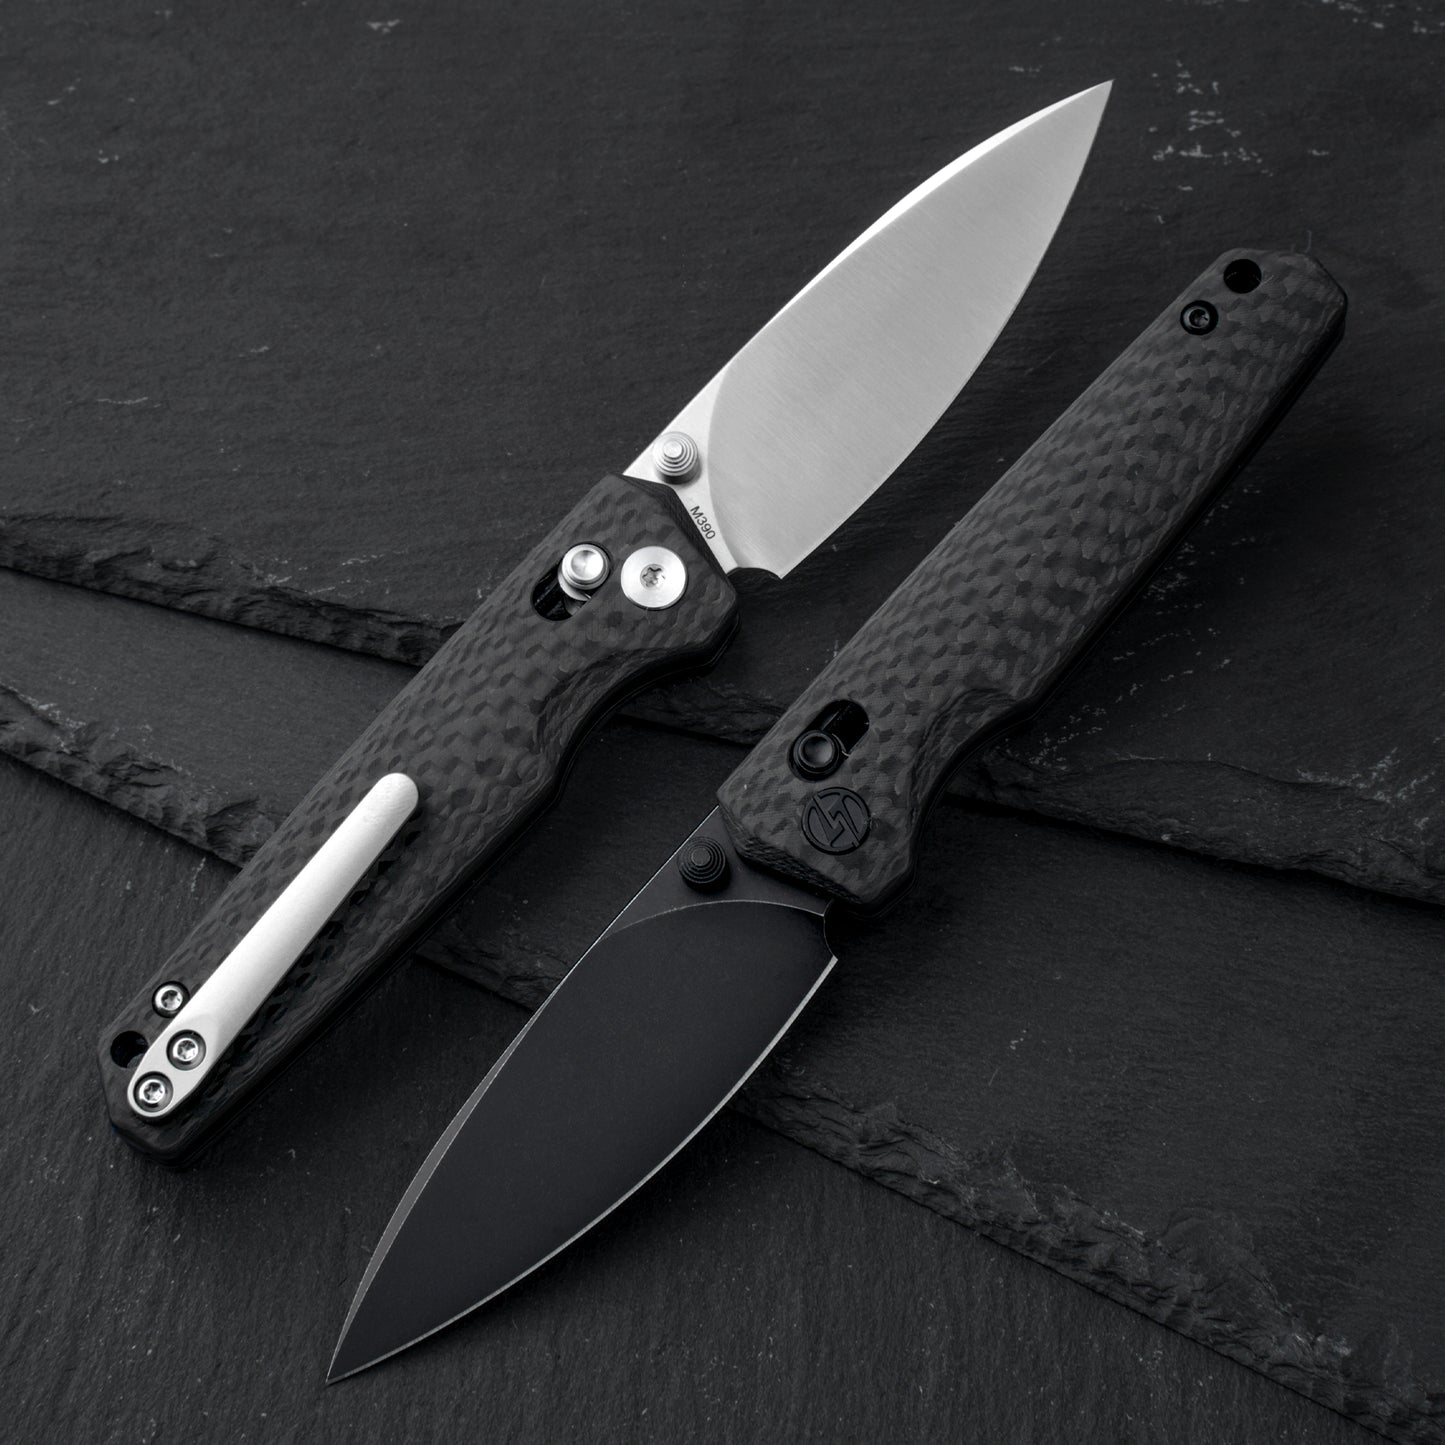 C045 Mini Folding Knife 2.6" M390 Blade White Carbon Fiber Handle, Crossbar Lock Sharp Small Folding Knife with Deep Carry Pocket Clip For EDC